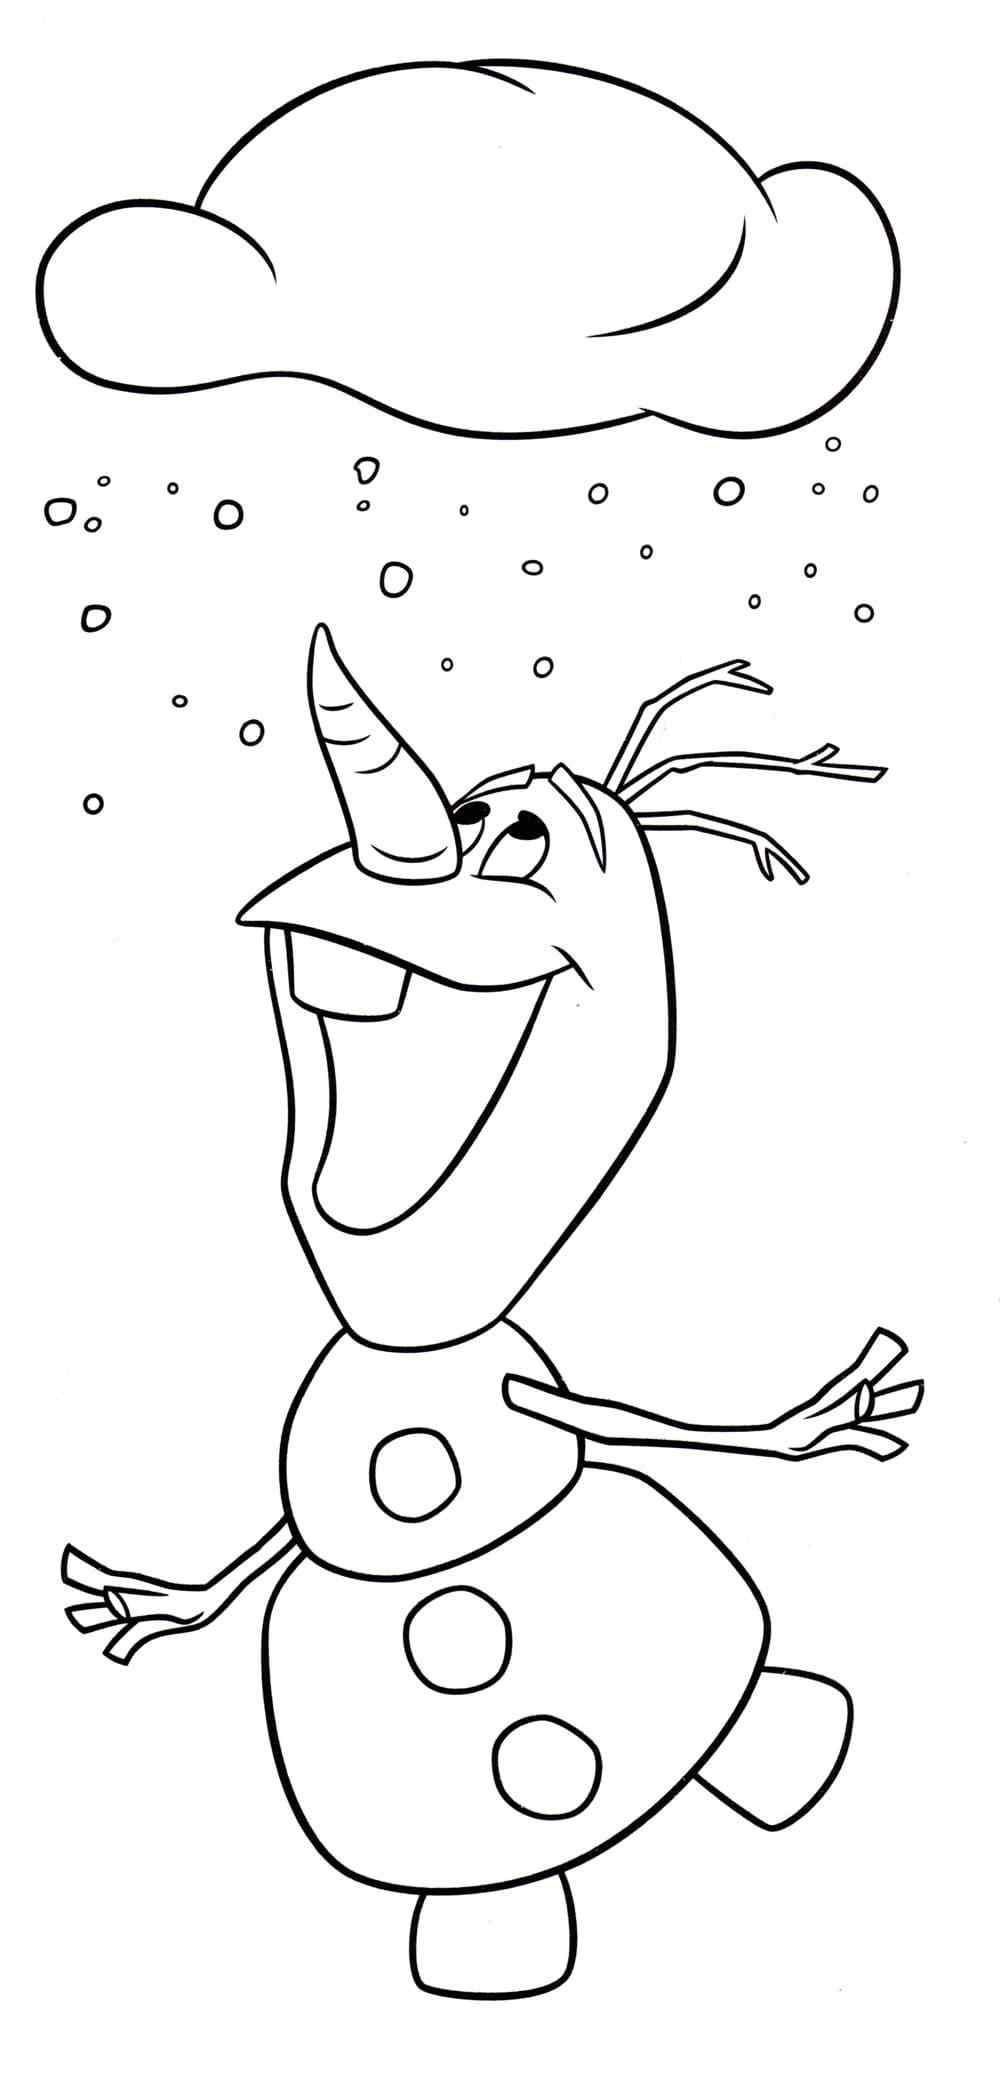 Olaf Enjoys The First Snow In Christmas